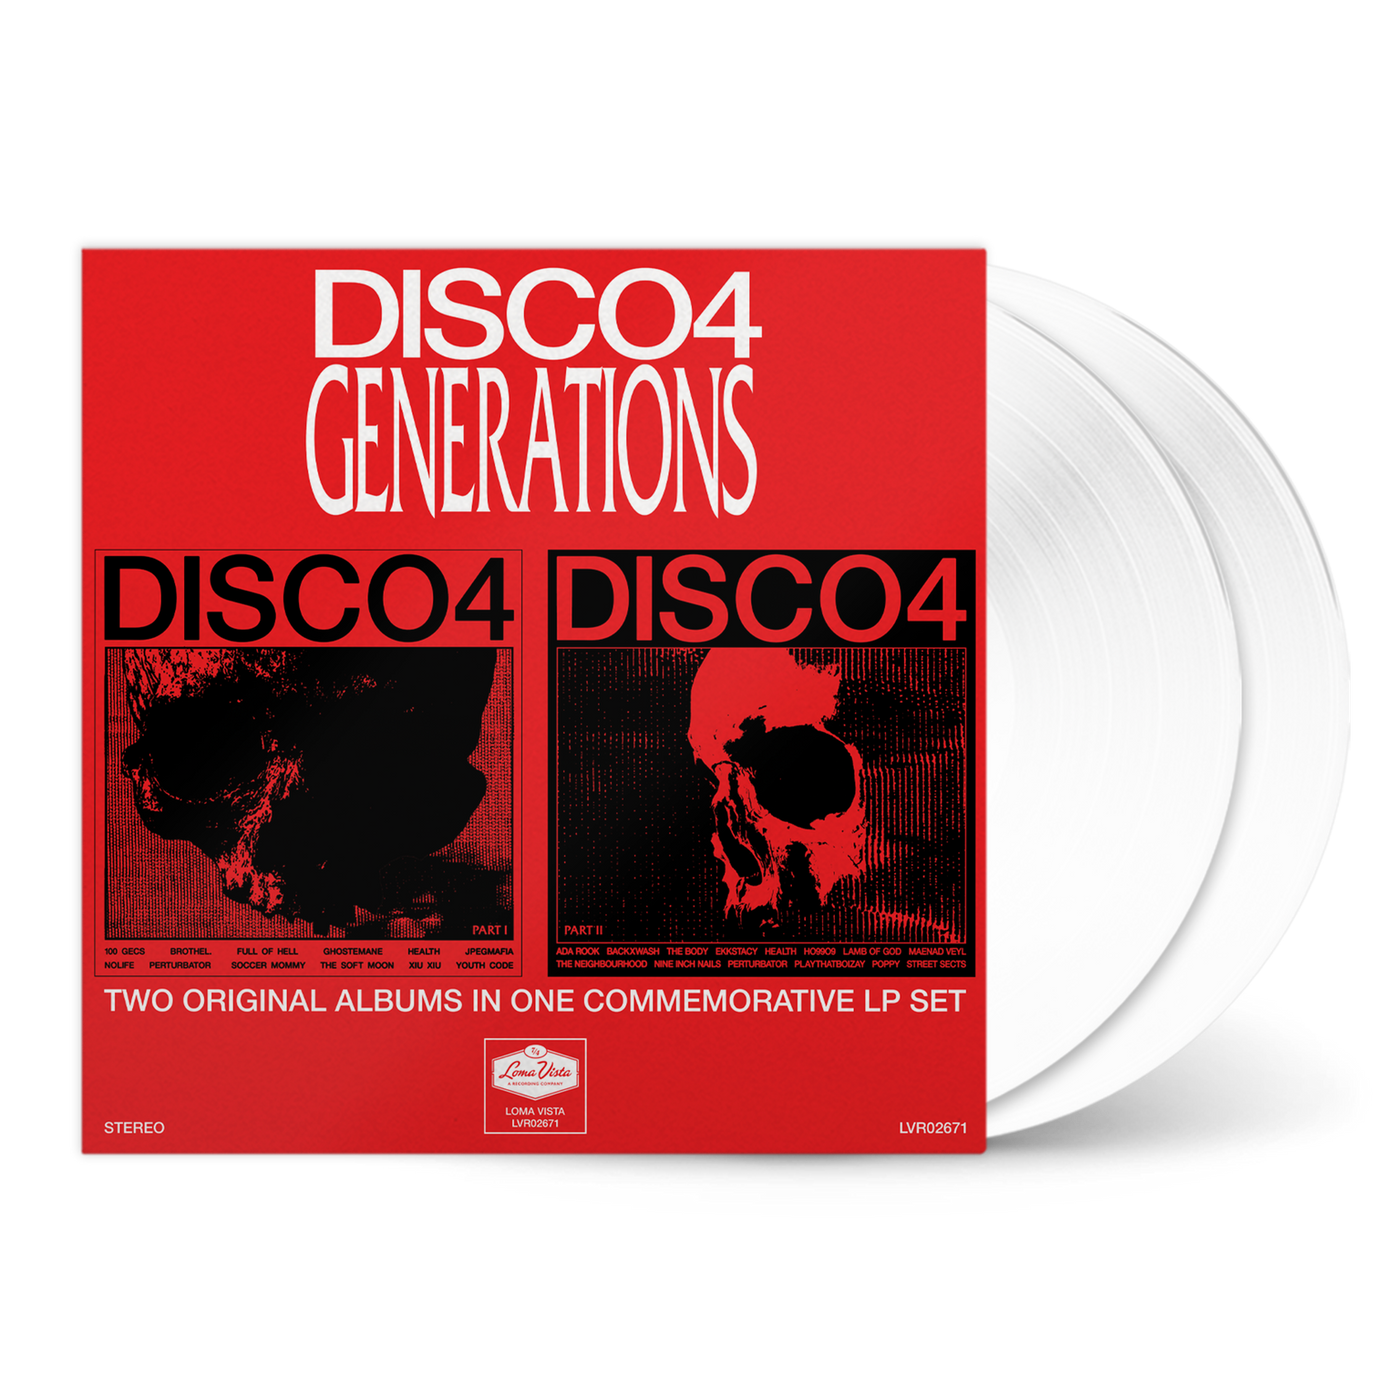 DISCO4 :: PART II Generations Edition 2XLP Limited Edition White Vinyl